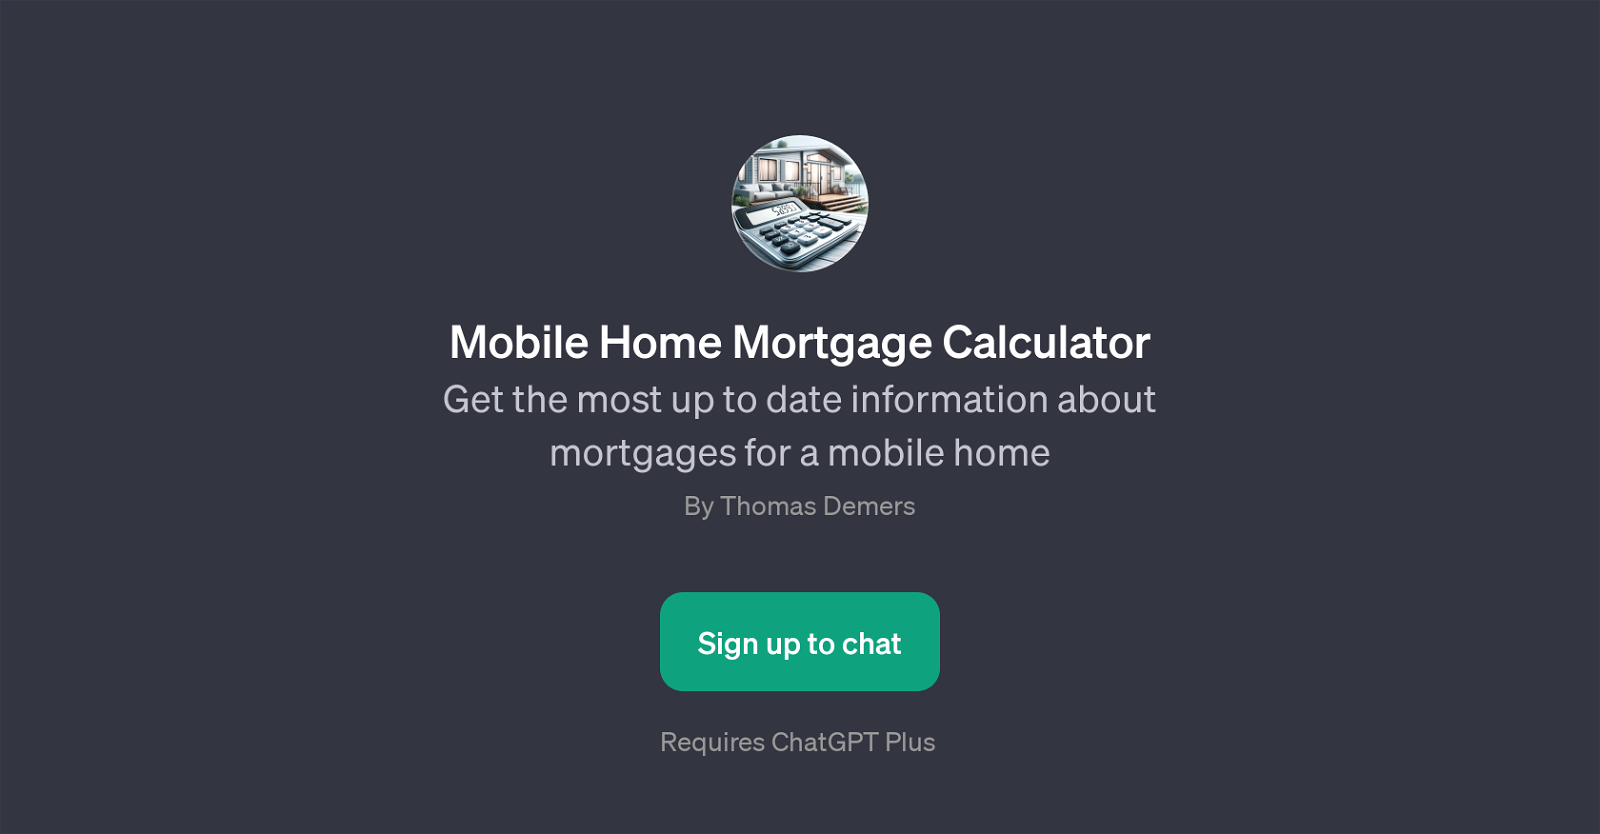 Mobile Home Mortgage Calculator website